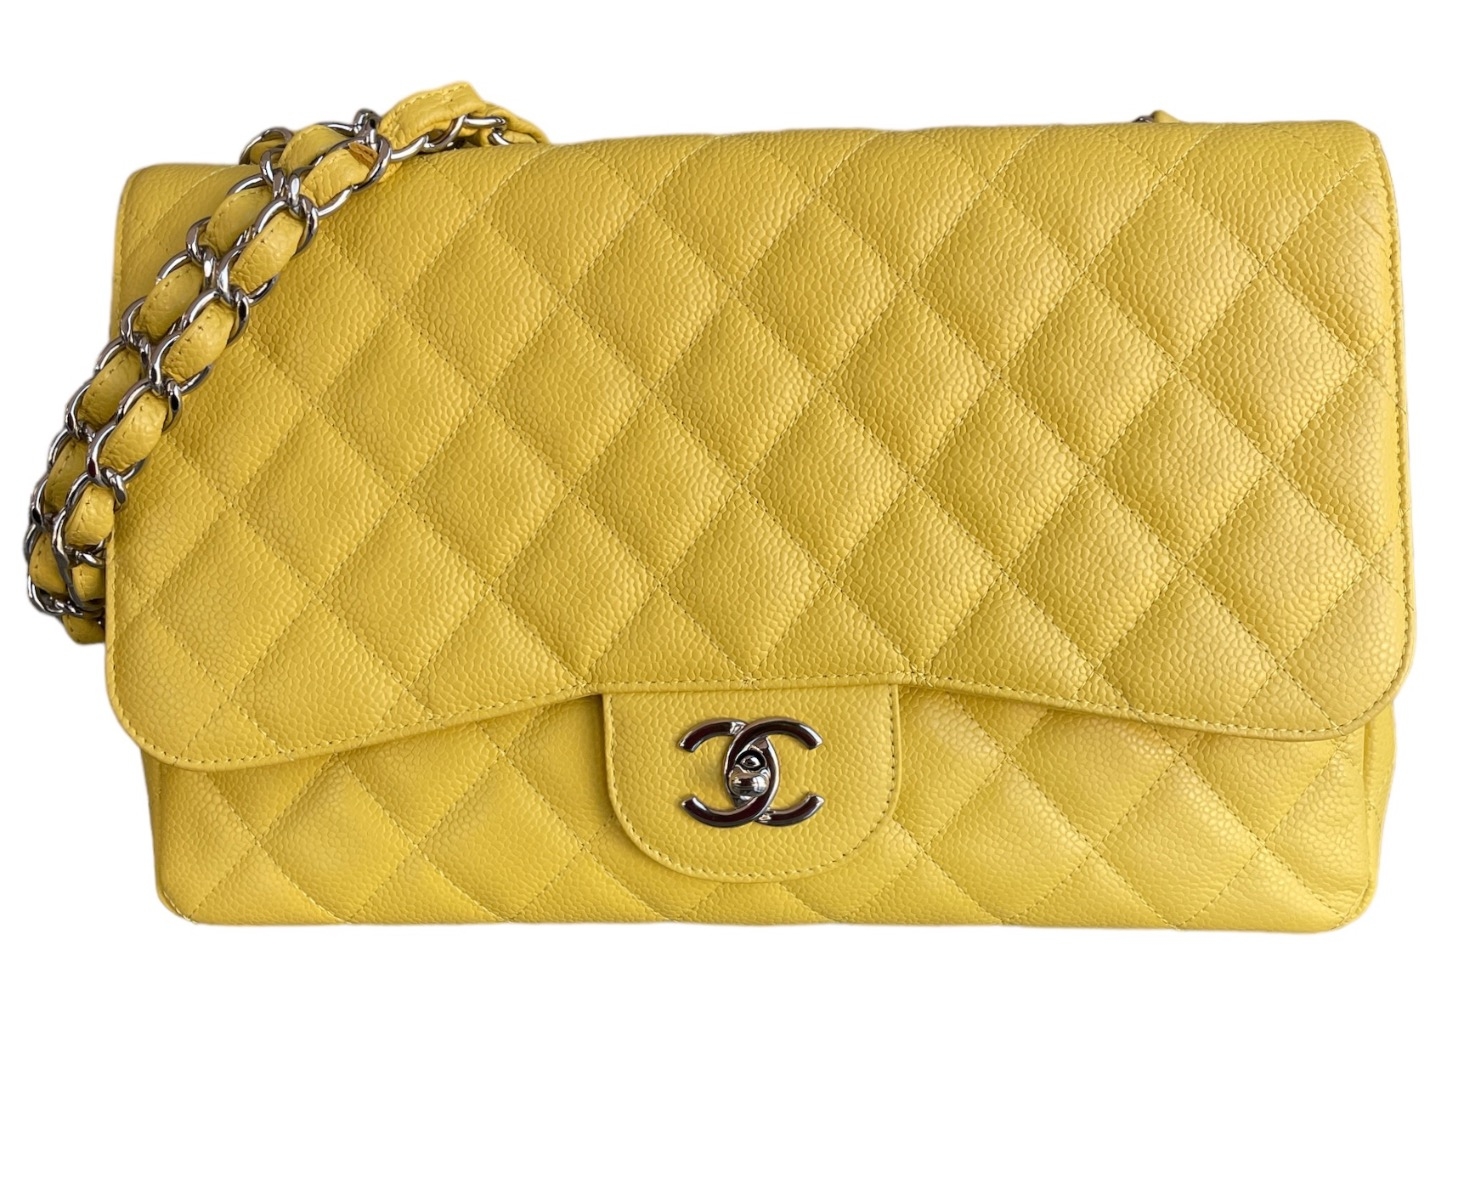 CHANEL Yellow Bags & Handbags for Women